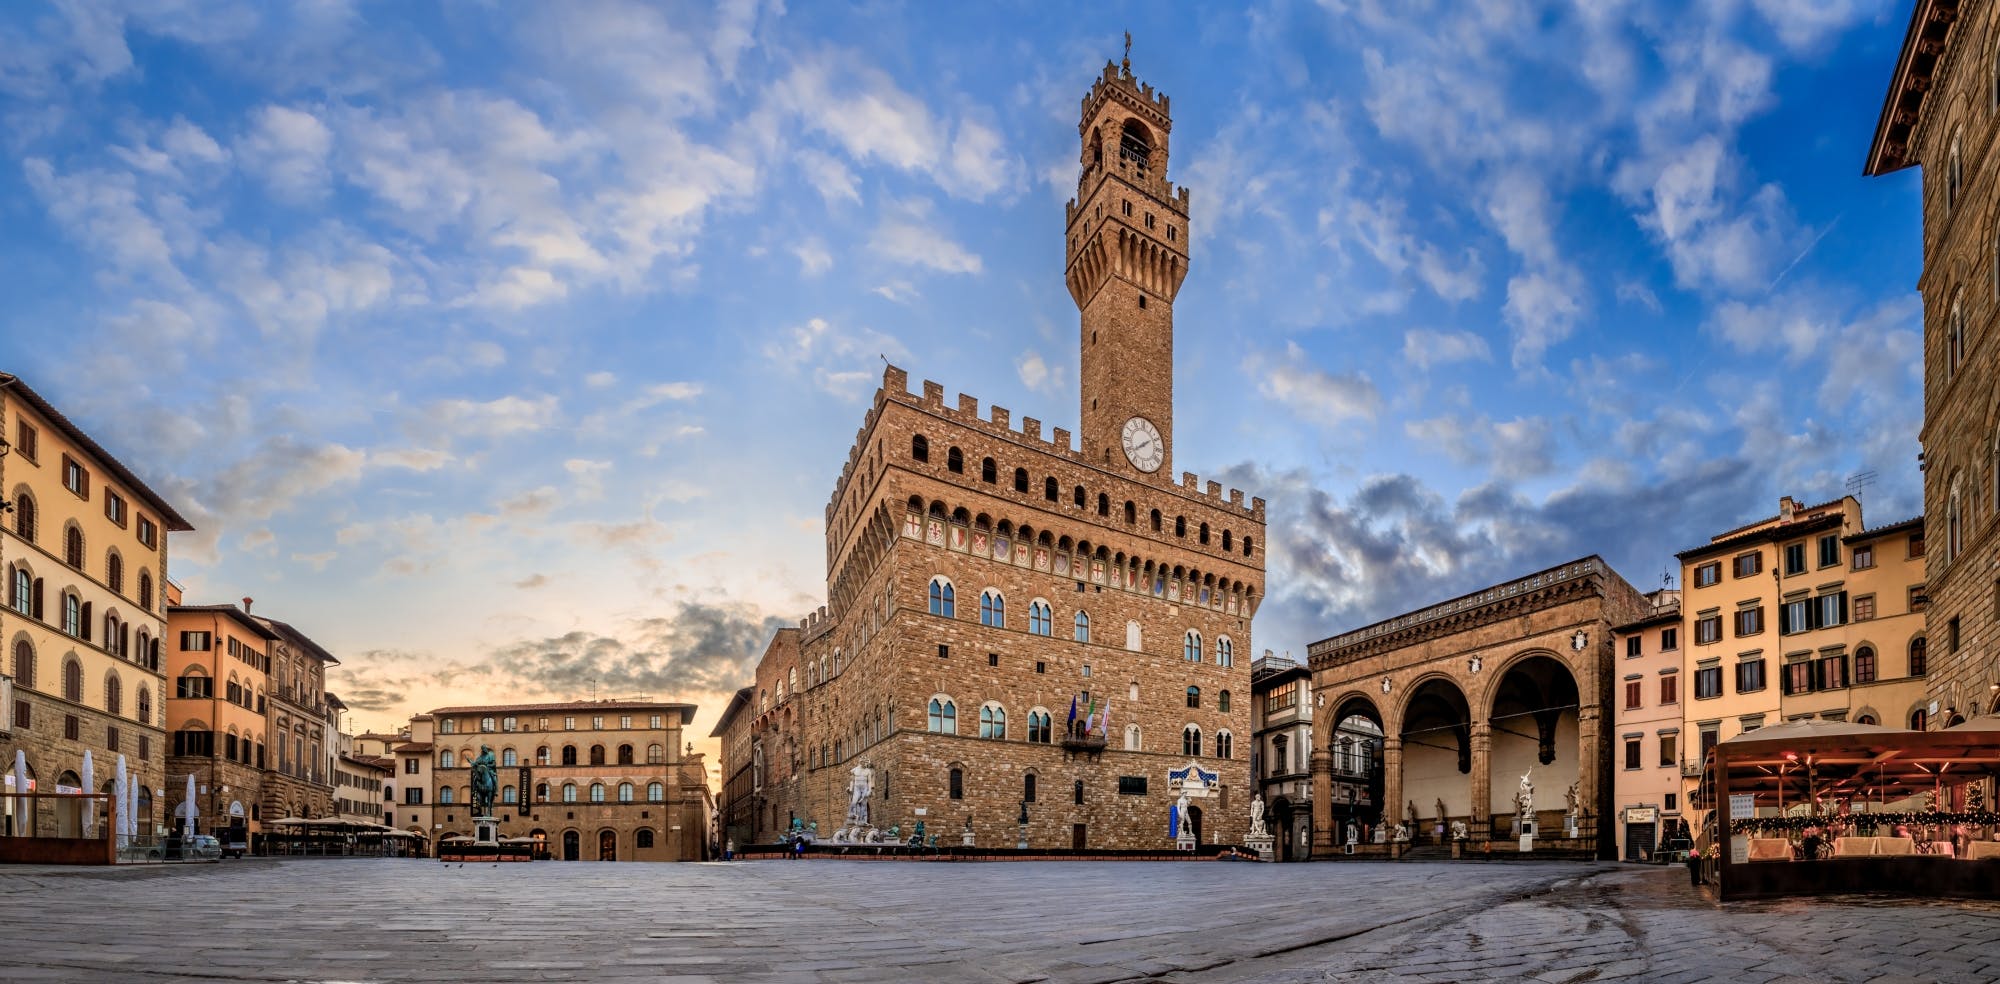 Palazzo Vecchio secret passages tour with lunch or gelato tasting Musement